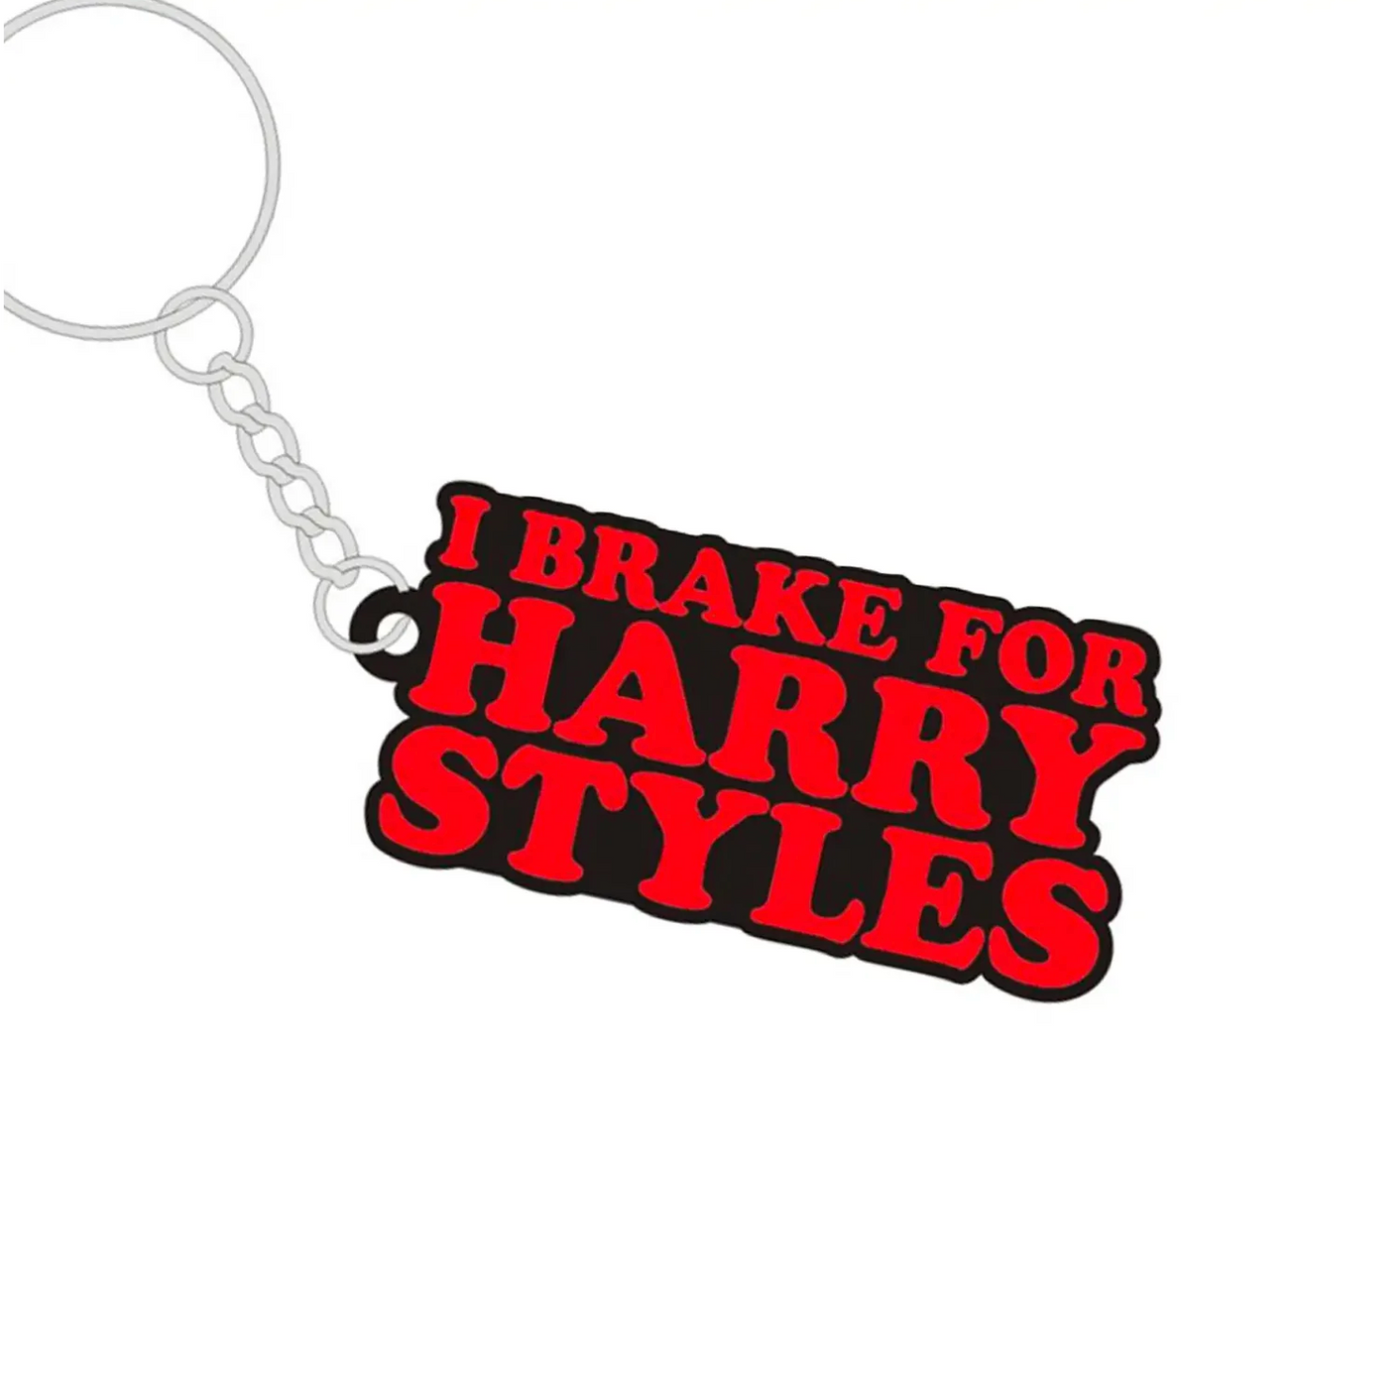 I Brake For Harry Styles Keychain